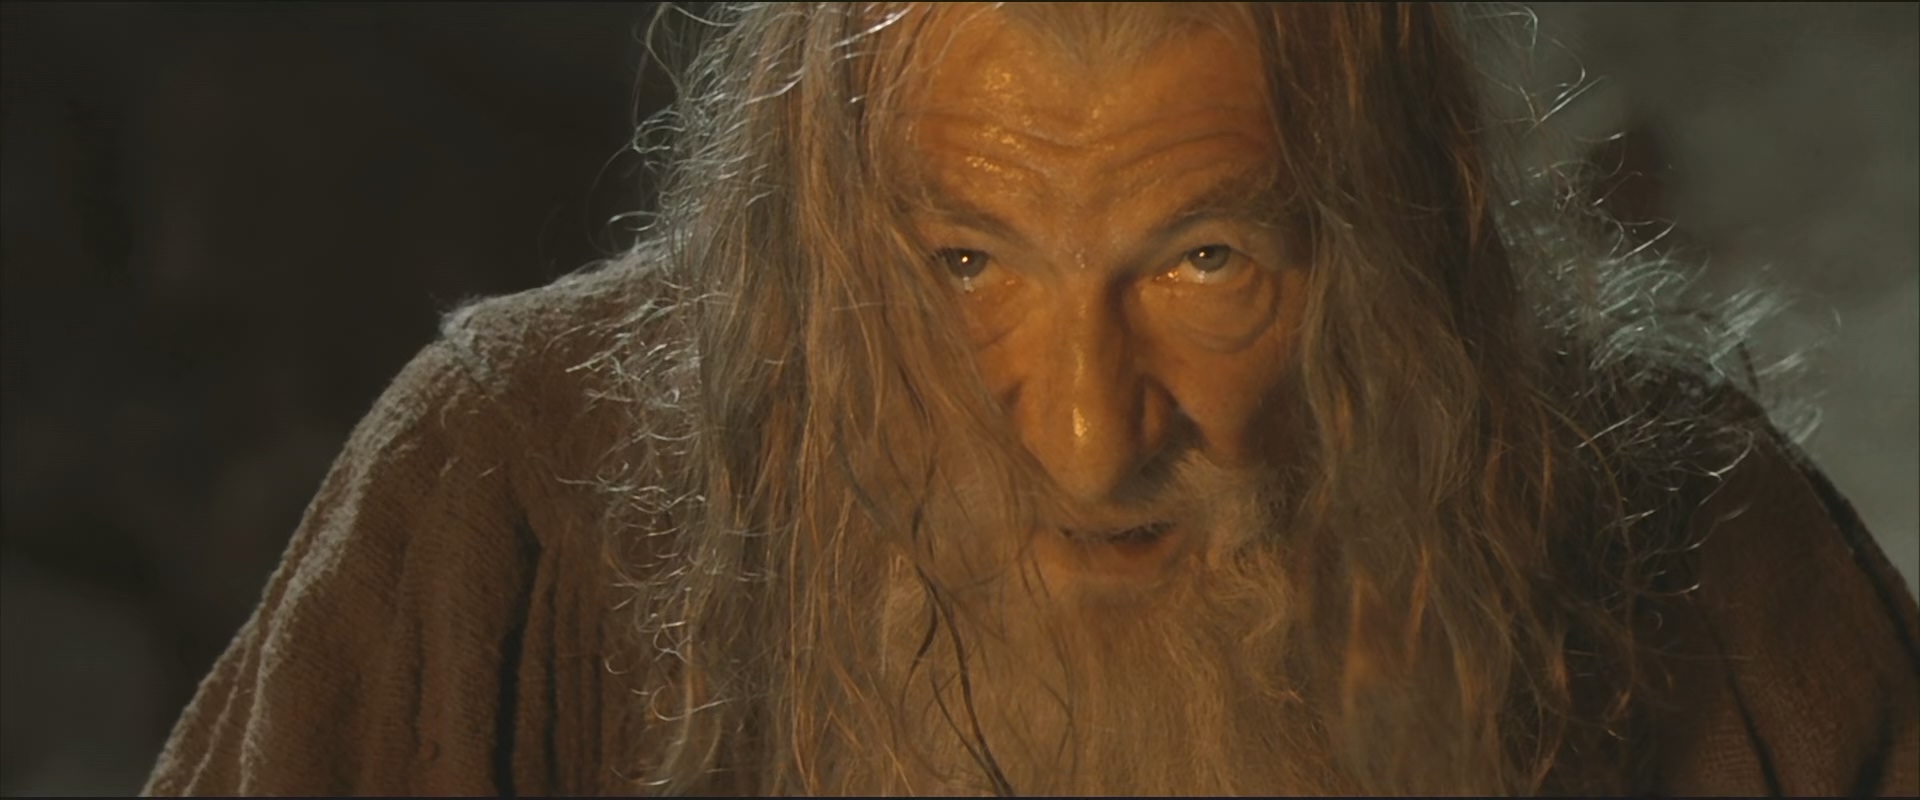 Властелин колец: Братва и кольцо / The Lord of the Rings: The Fellowship of the Ring / 2001 / АП (Гоблин) / HEVC / BDRip (1080p)